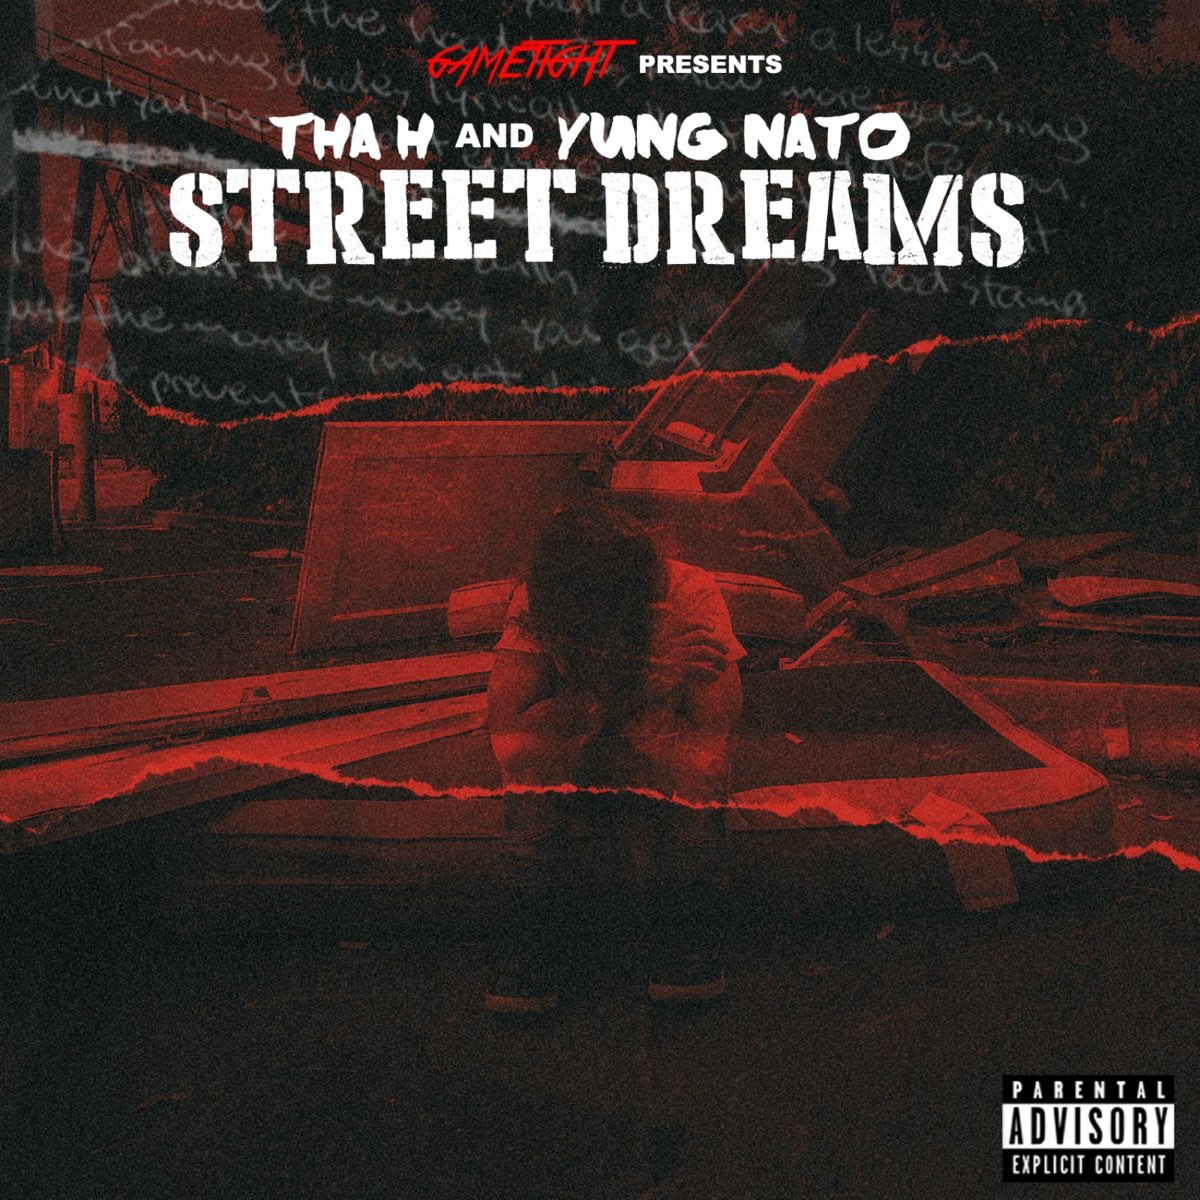 Street Dreams. PM - Street of Dreams. Street dreams на русском